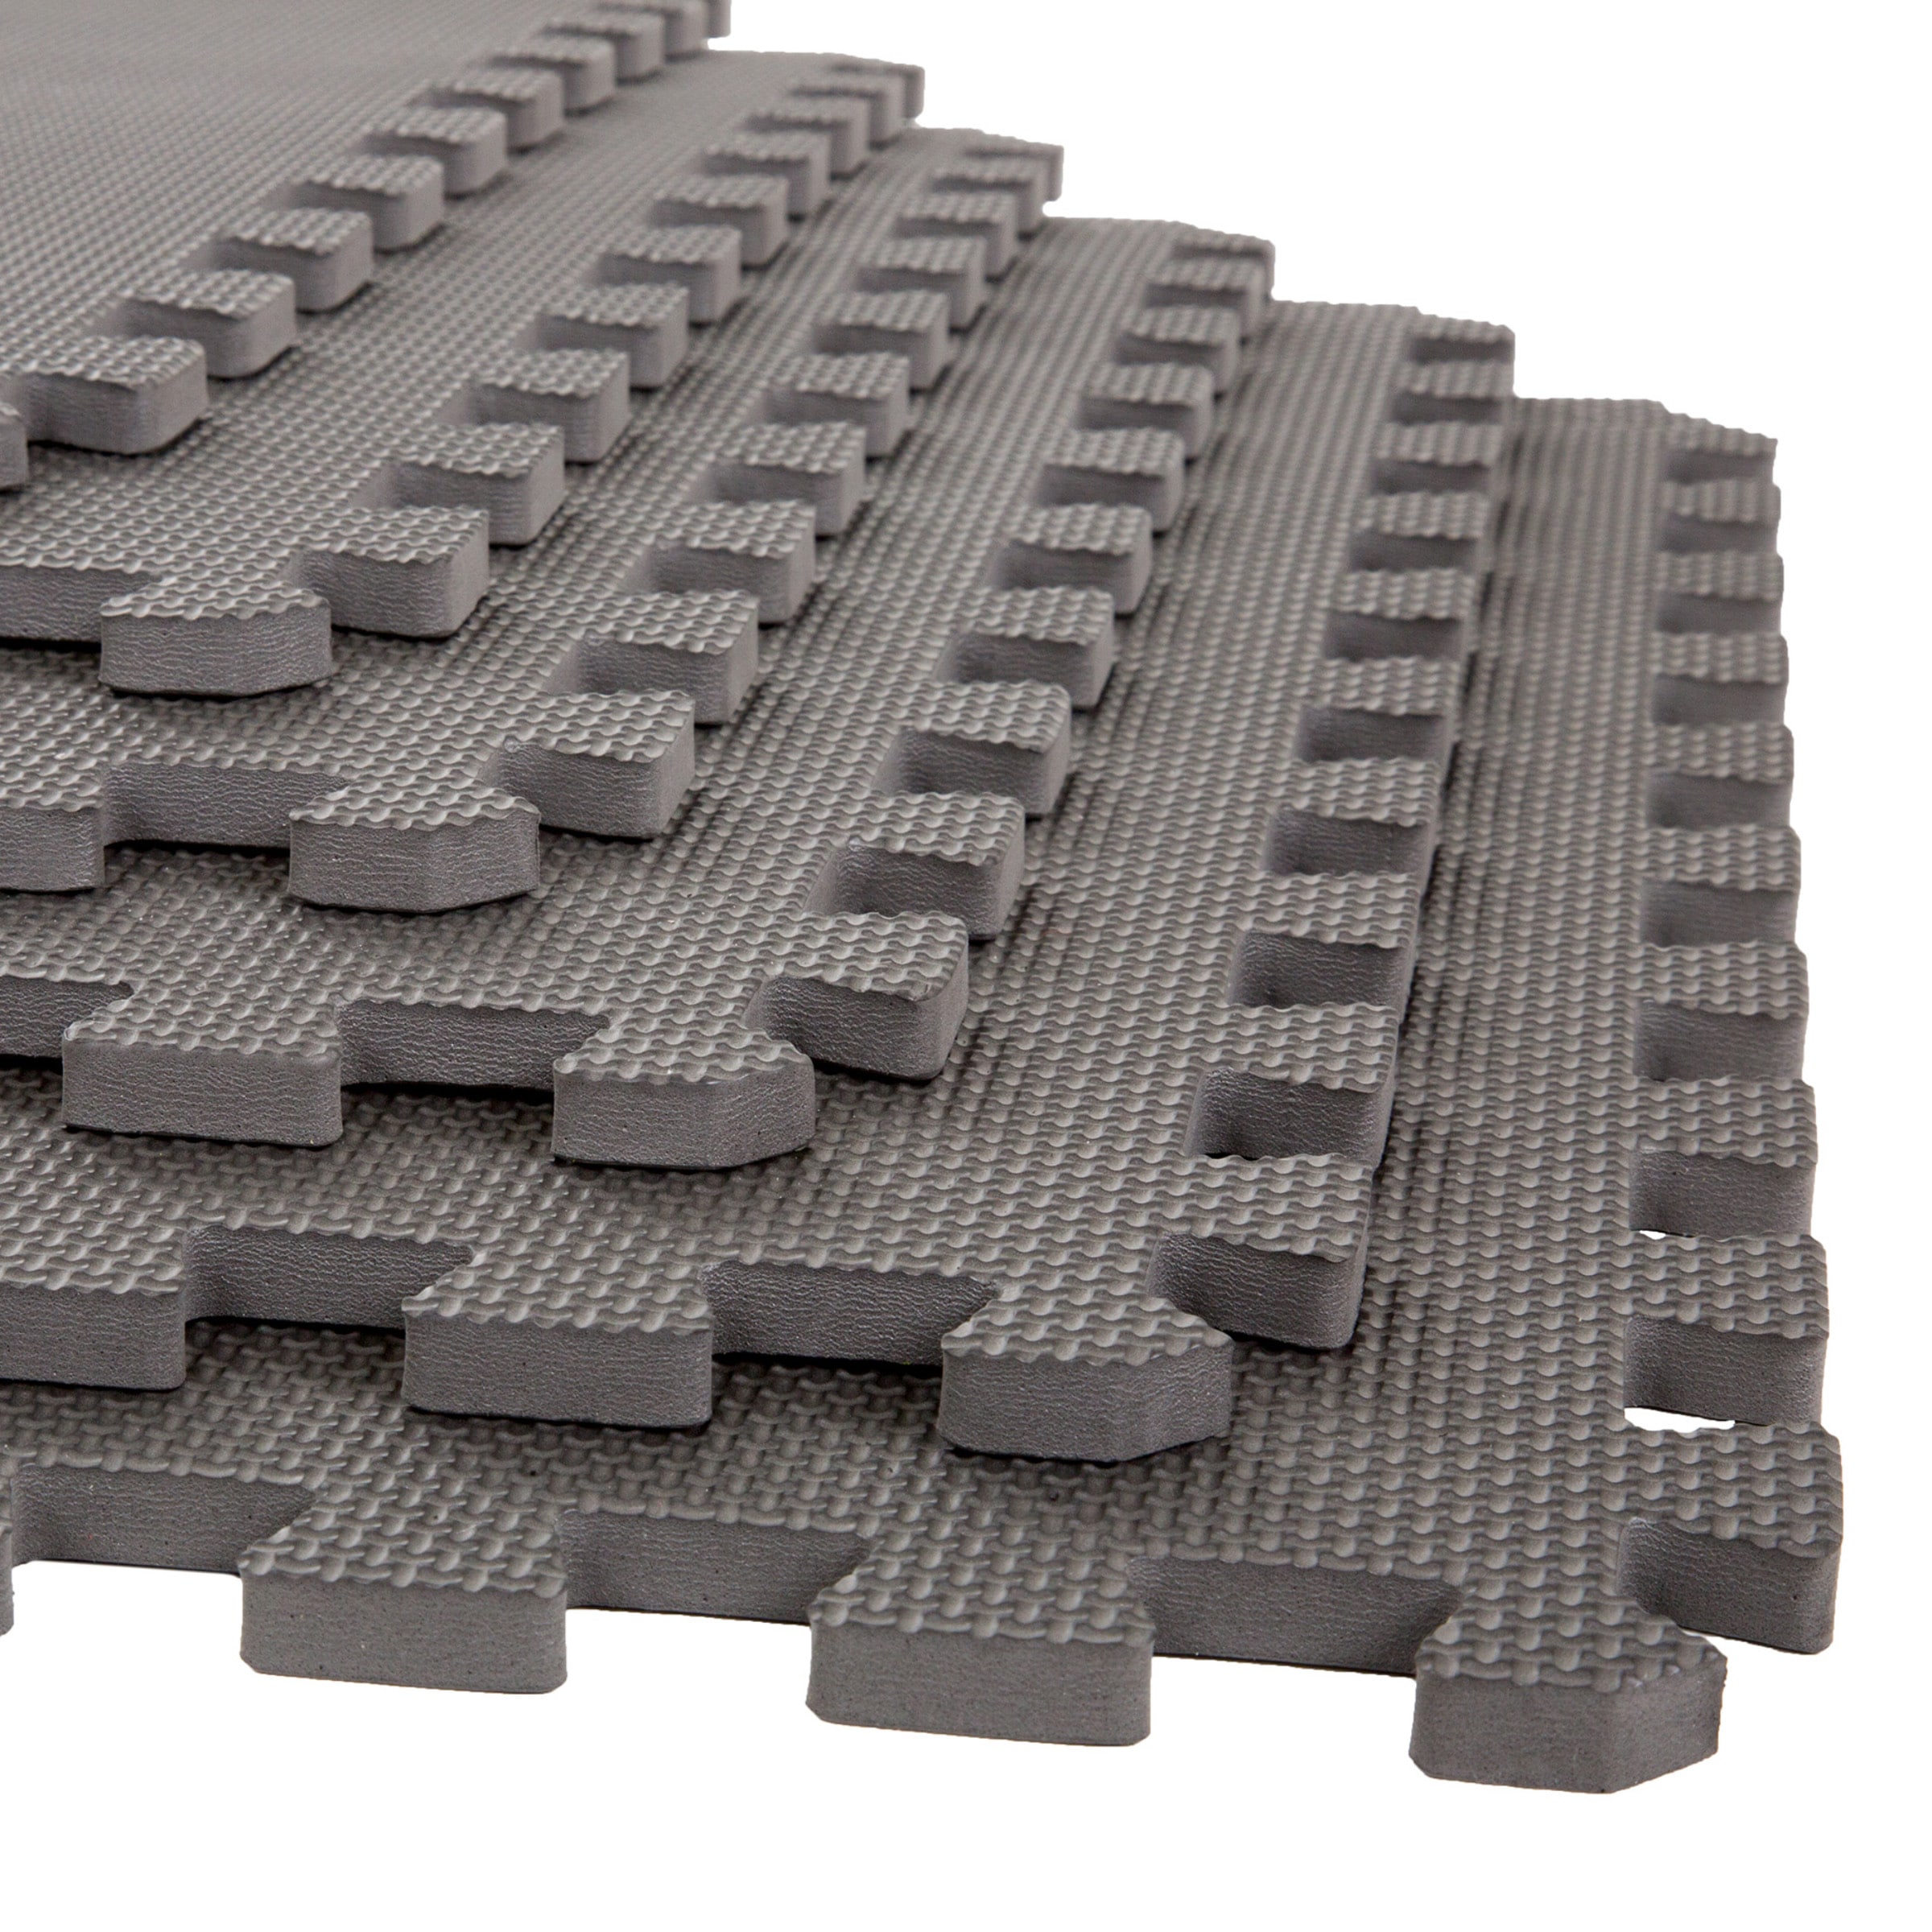 Black Silk Road Concepts SR-EFM-24-BLACK Exercise Mat with EVA Foam Interlocking Tiles 2 x 2 